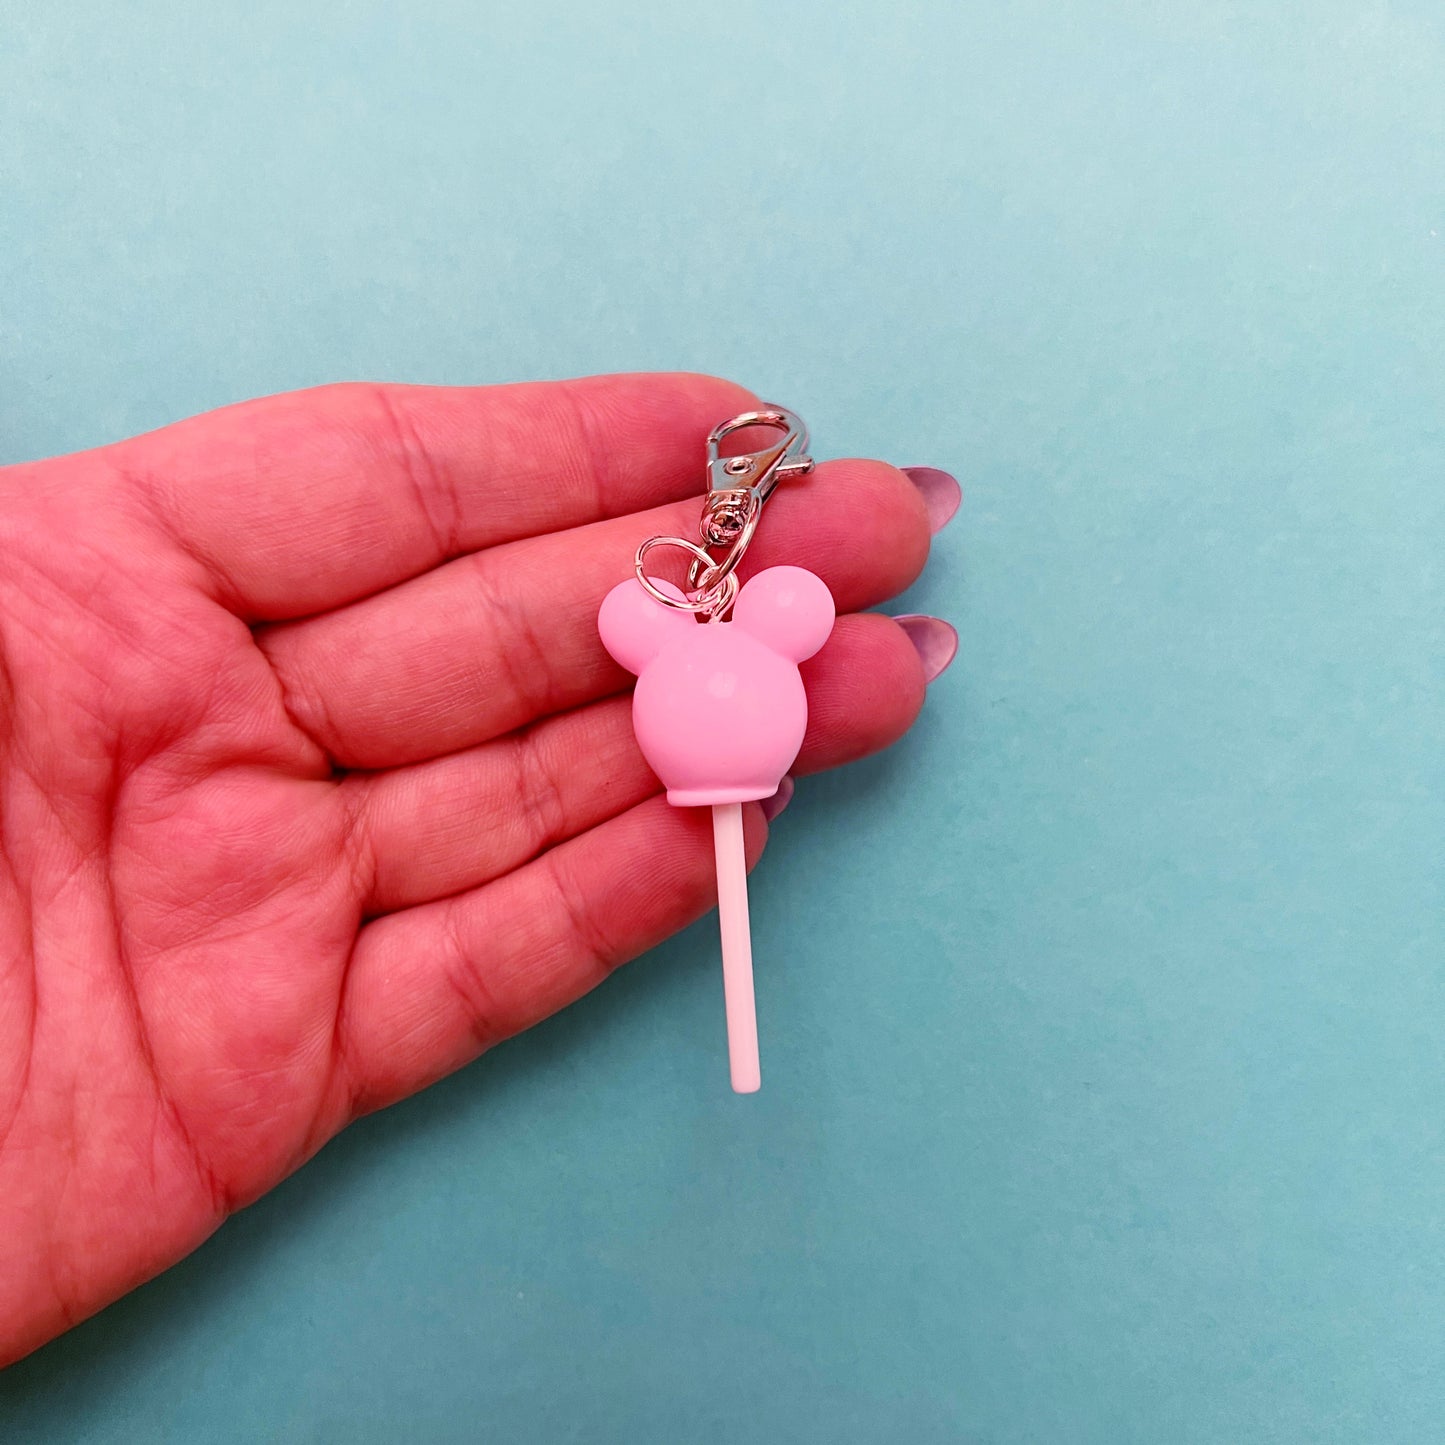 Pastel Pink Mouse Lollipop Bag Charm/Keychain